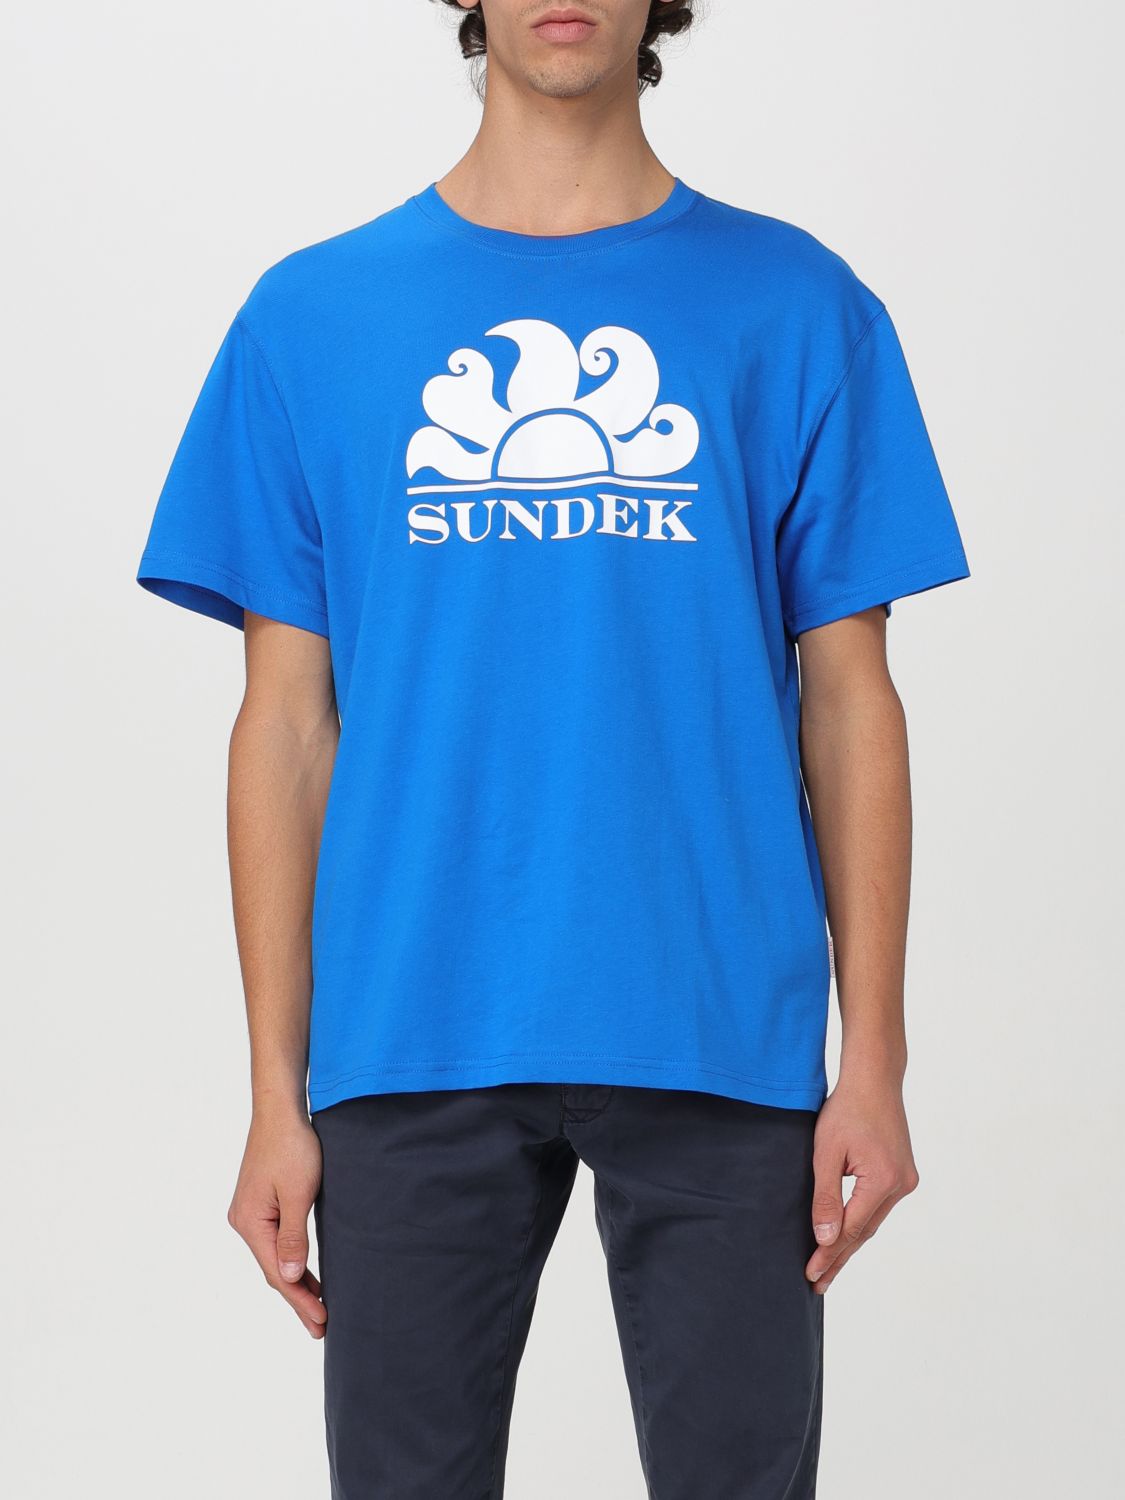 Sundek T-Shirt SUNDEK Men colour Royal Blue